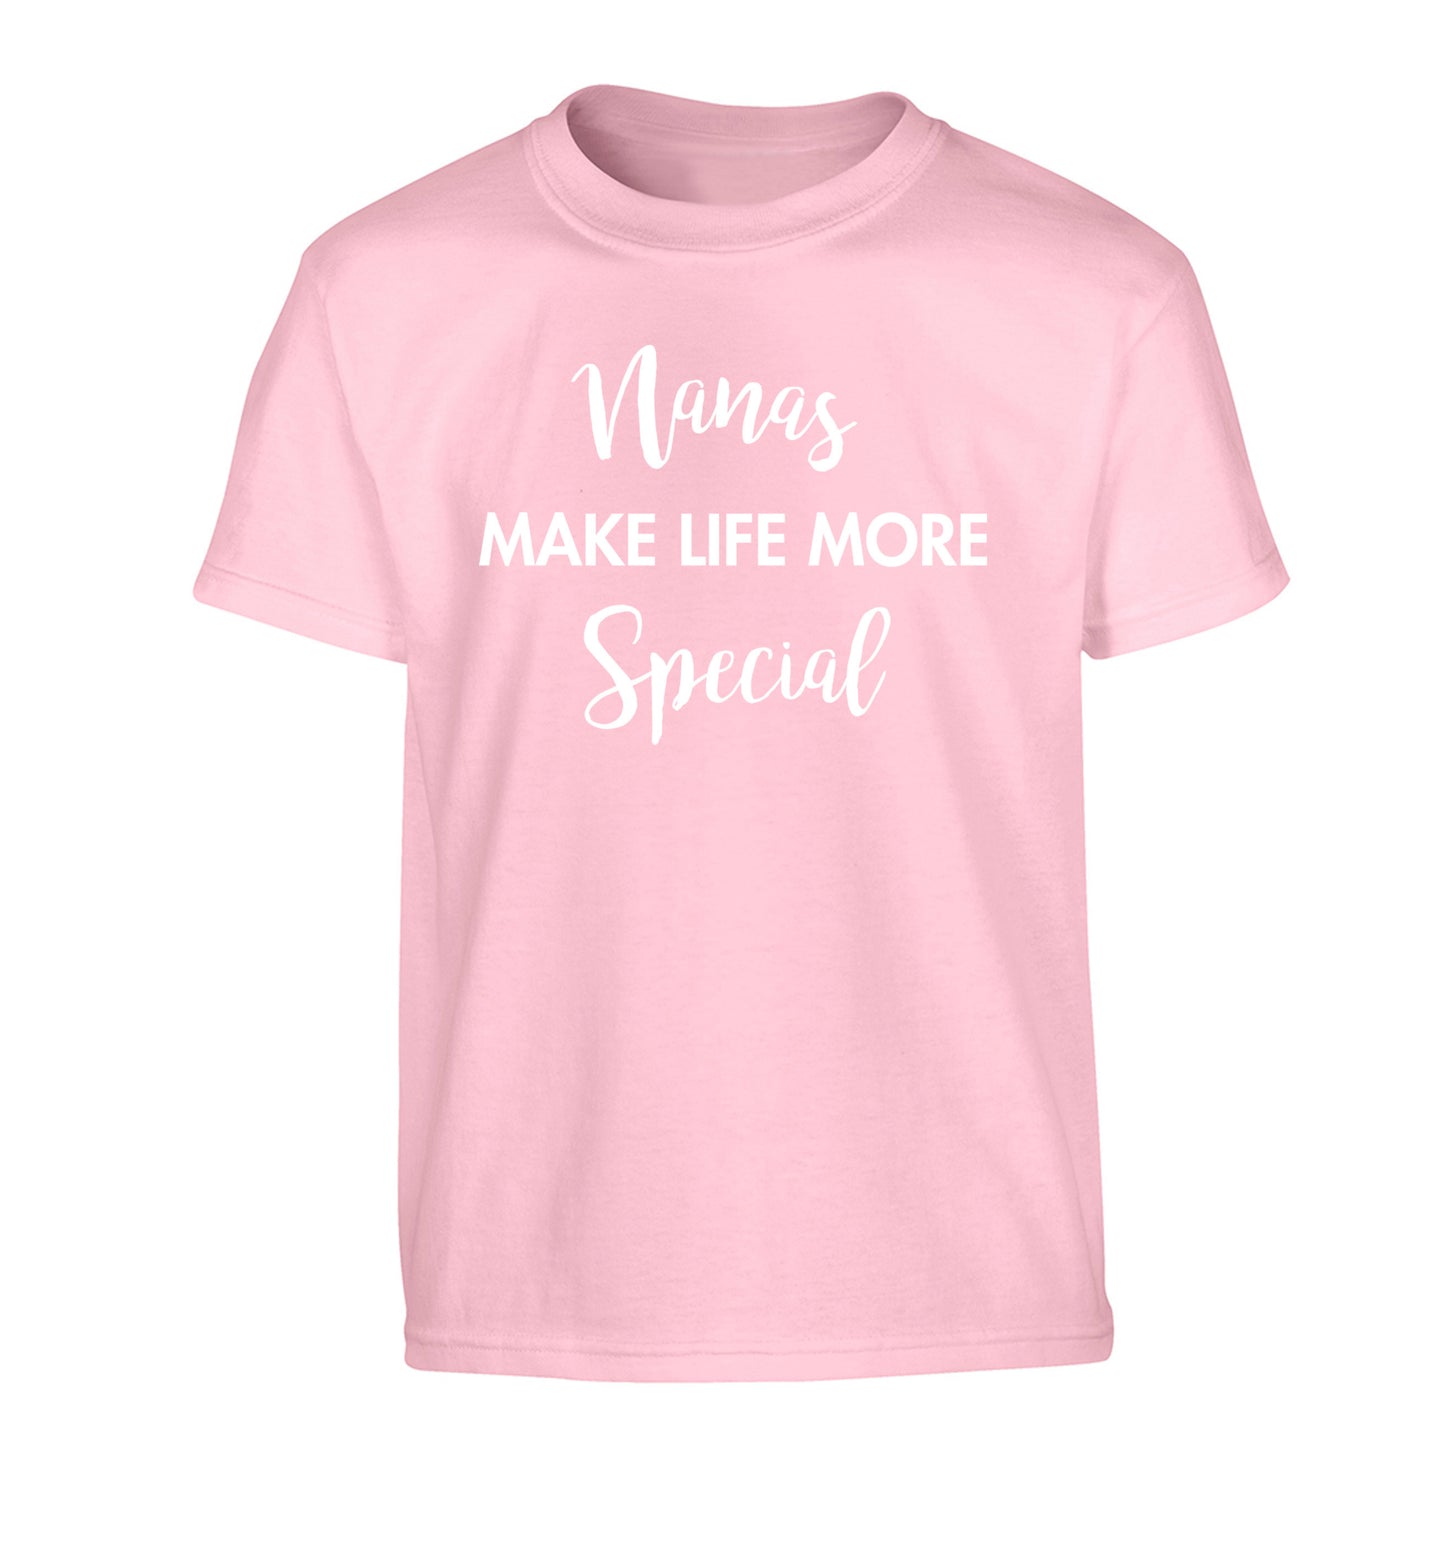 Nanas make life more special Children's light pink Tshirt 12-14 Years